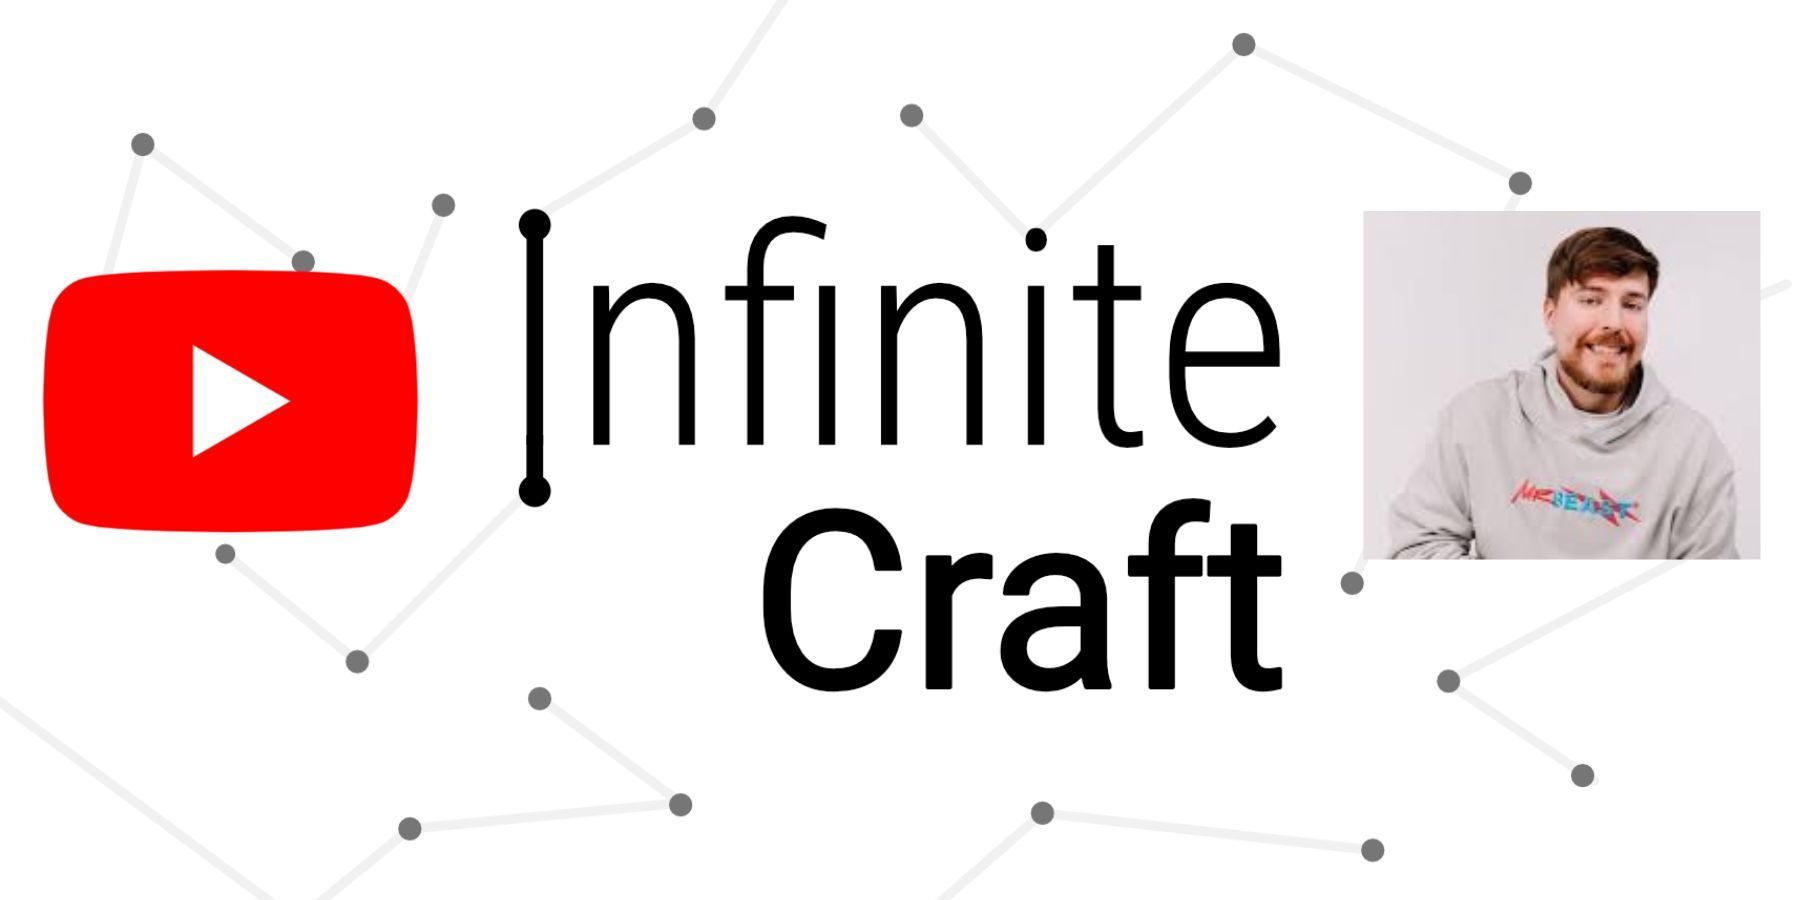 mr beast infinite craft